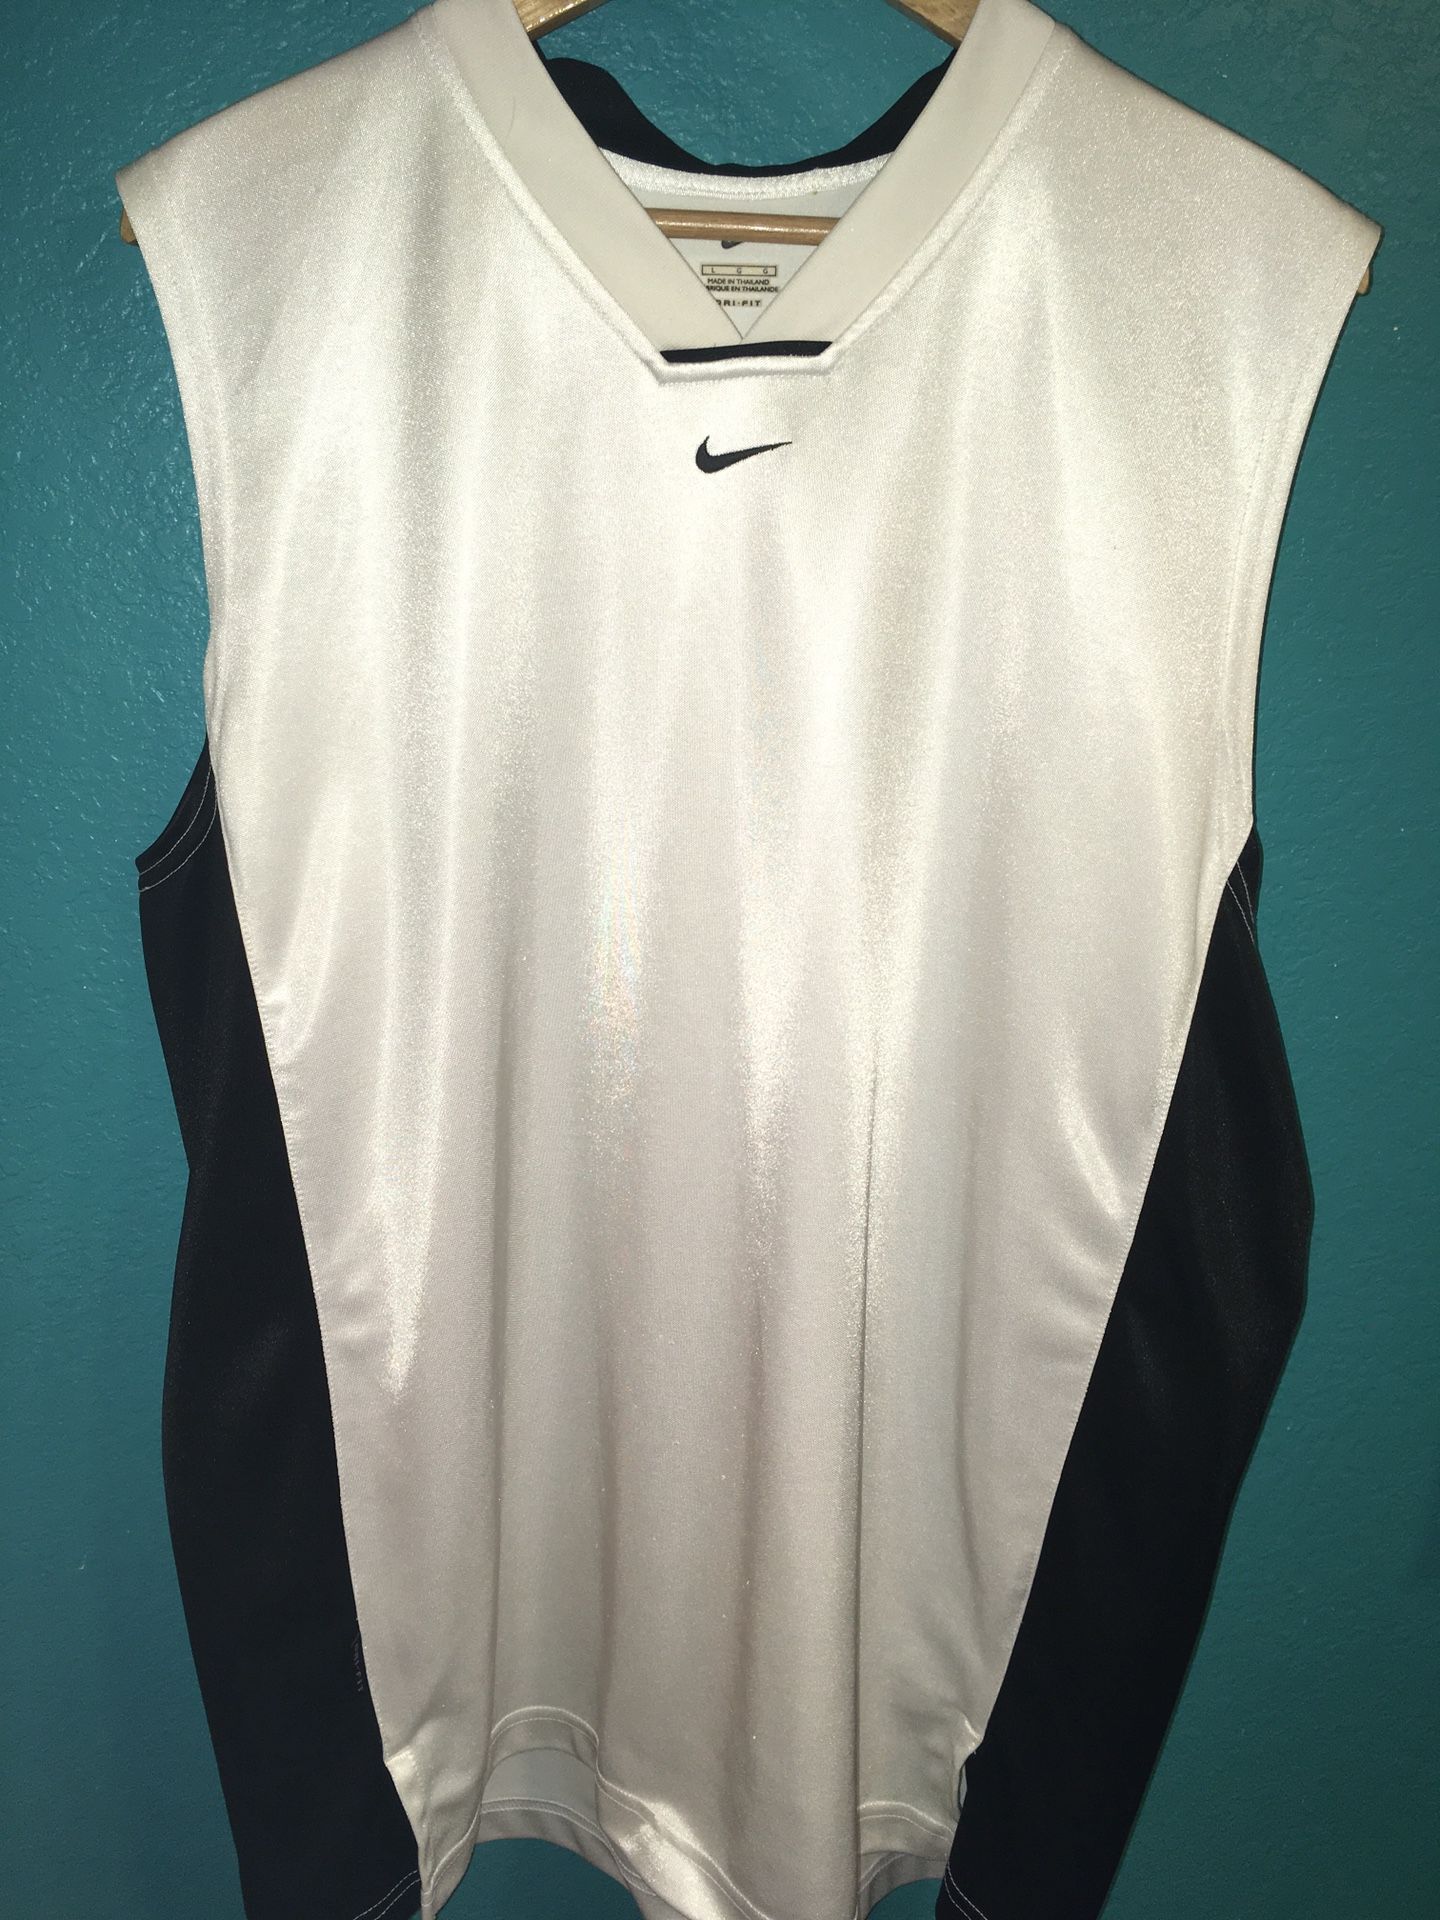 Nike Sleeveless Shirt